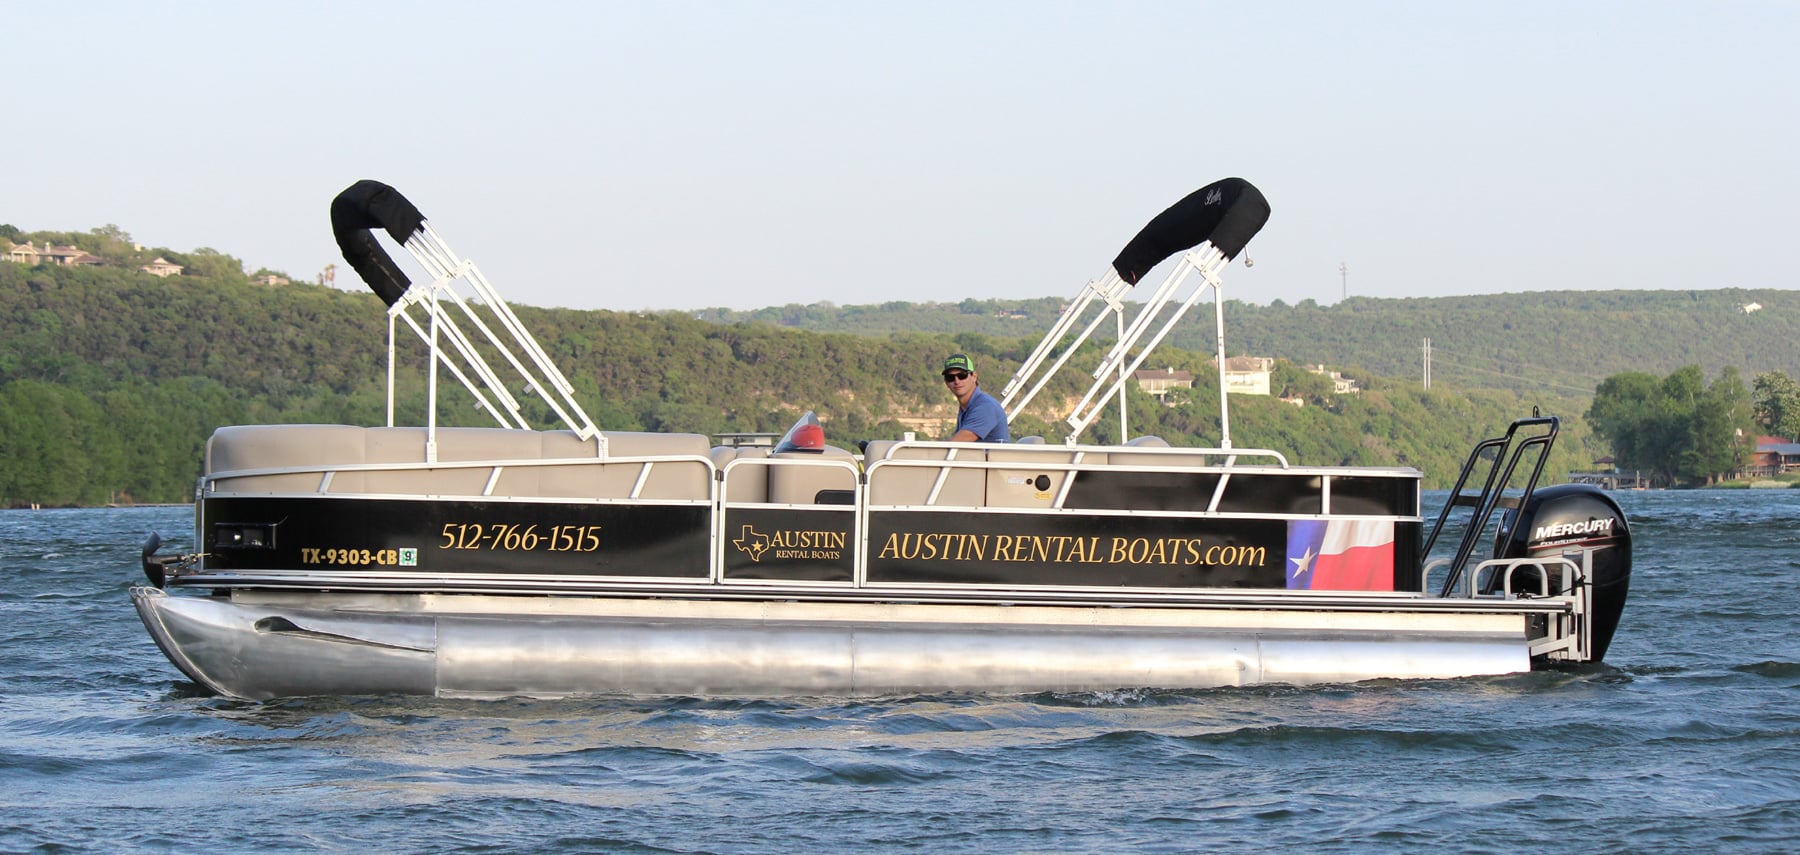 Austin Rental Boats